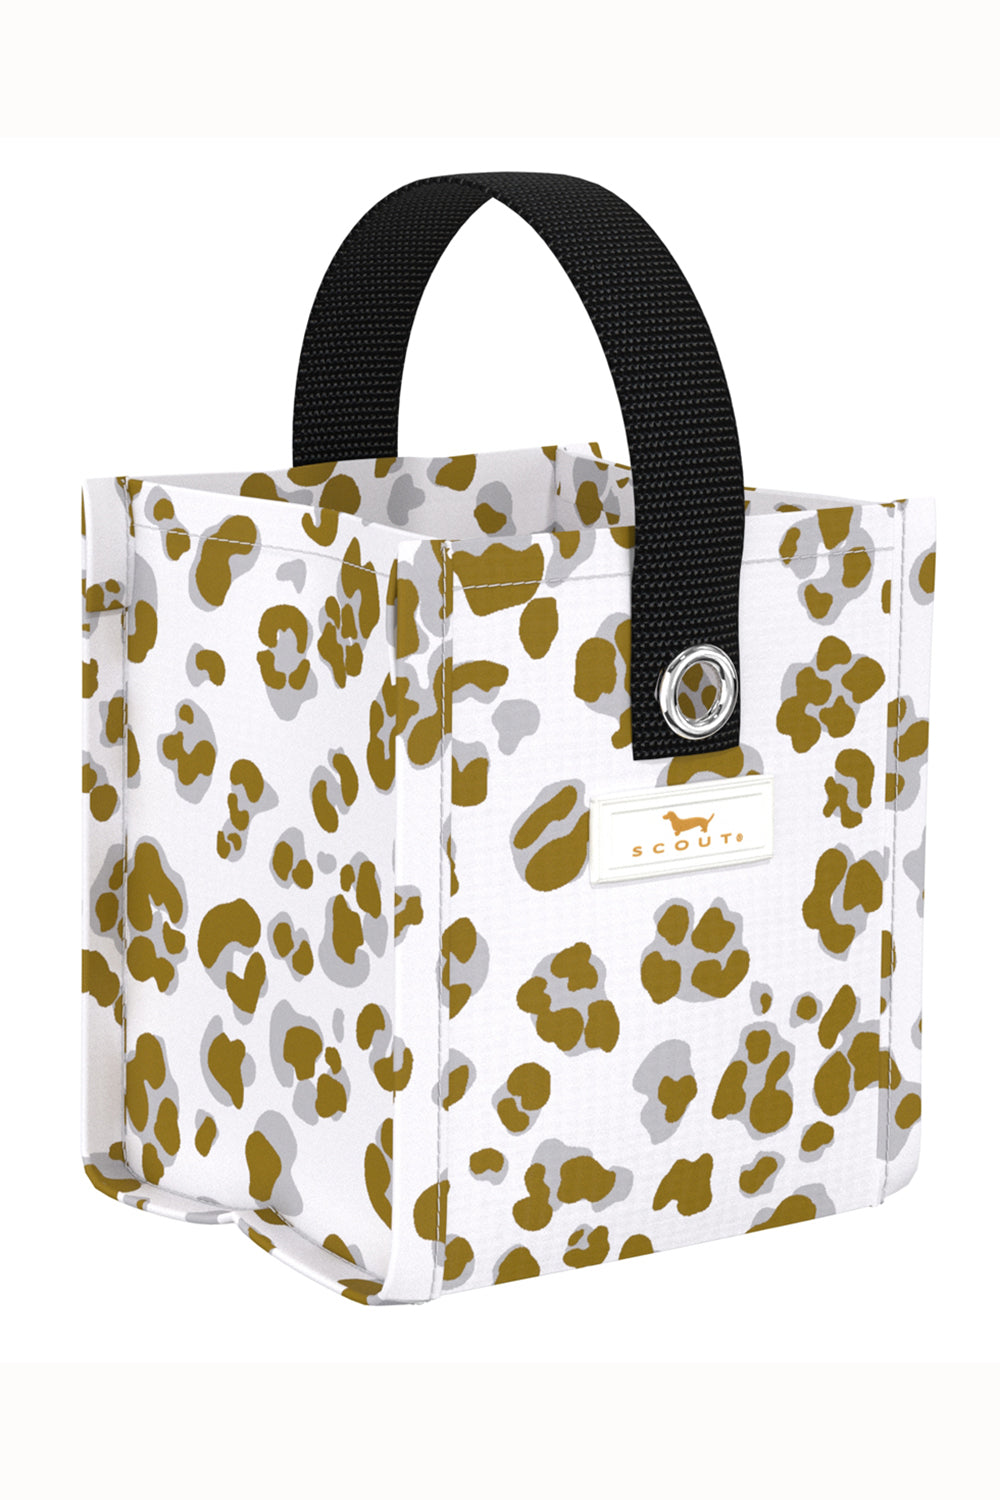 SIDEWALK SALE ITEM - Mini Mini Package Gift Bag - "Kitty Glitter" H22